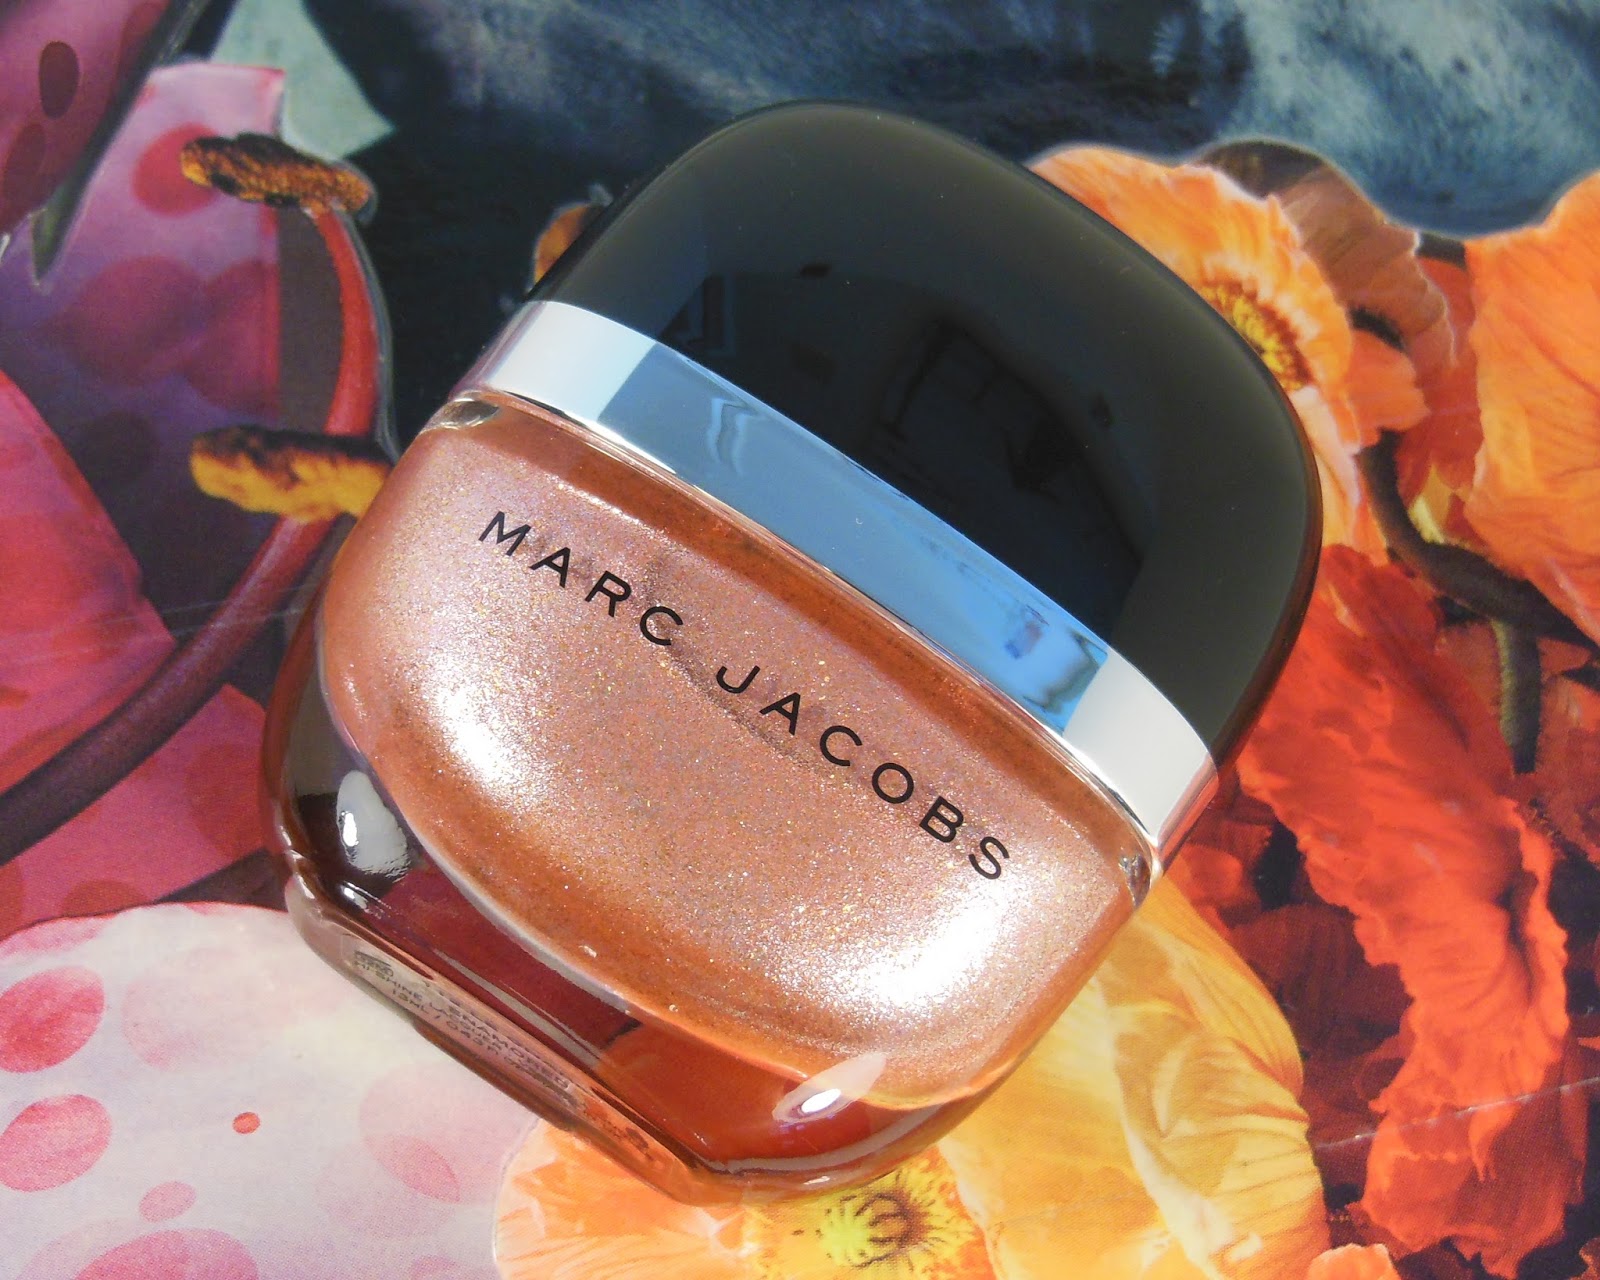 3. Marc Jacobs Beauty Enamored Hi-Shine Nail Polish in "Le Charm" - wide 9